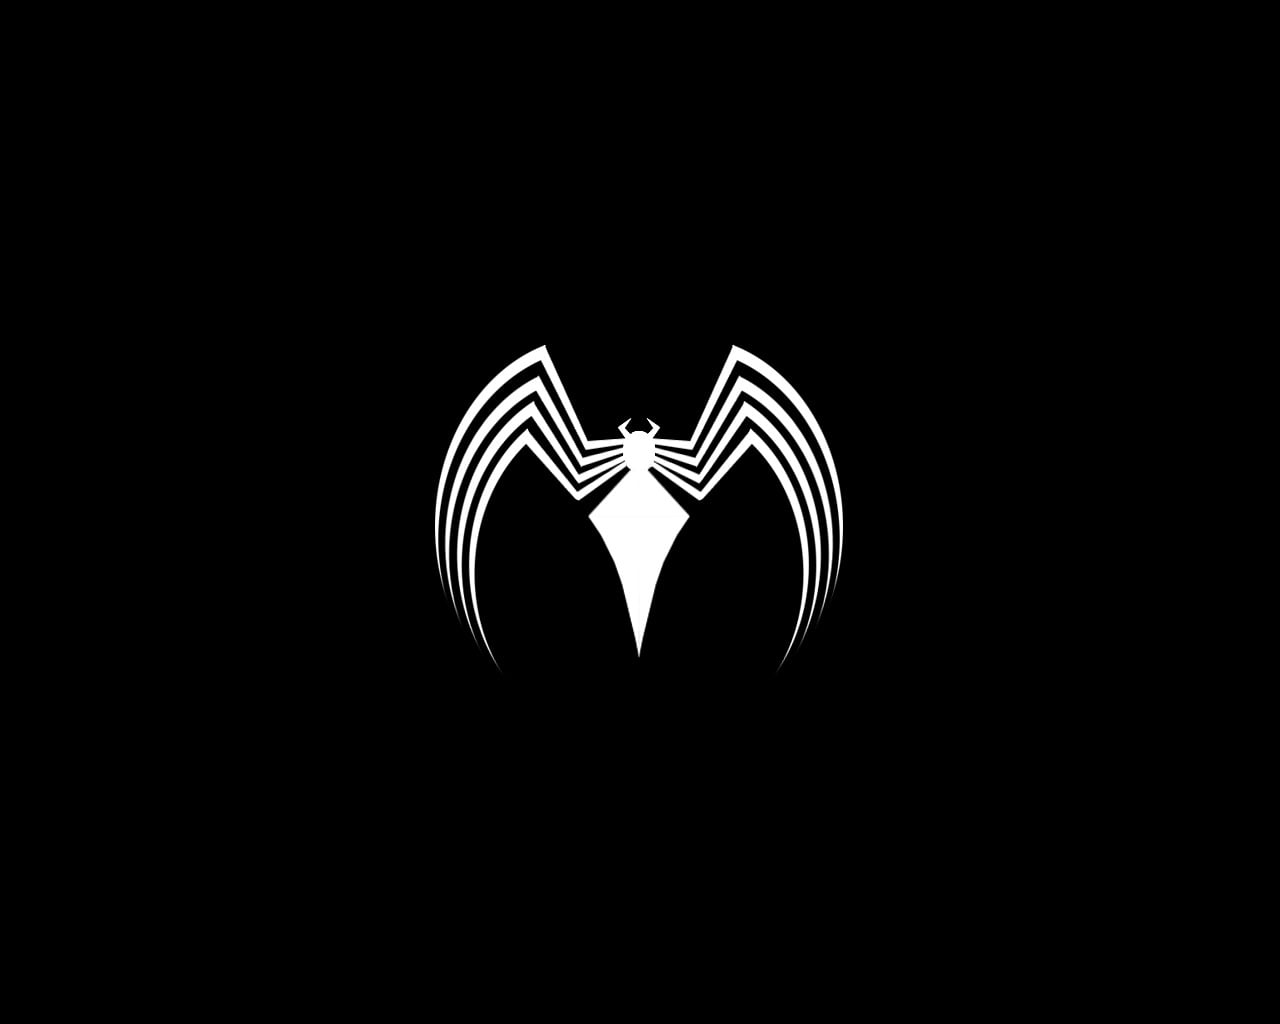 Spiderman logo, Venom, Spider-Man, symbols, black background